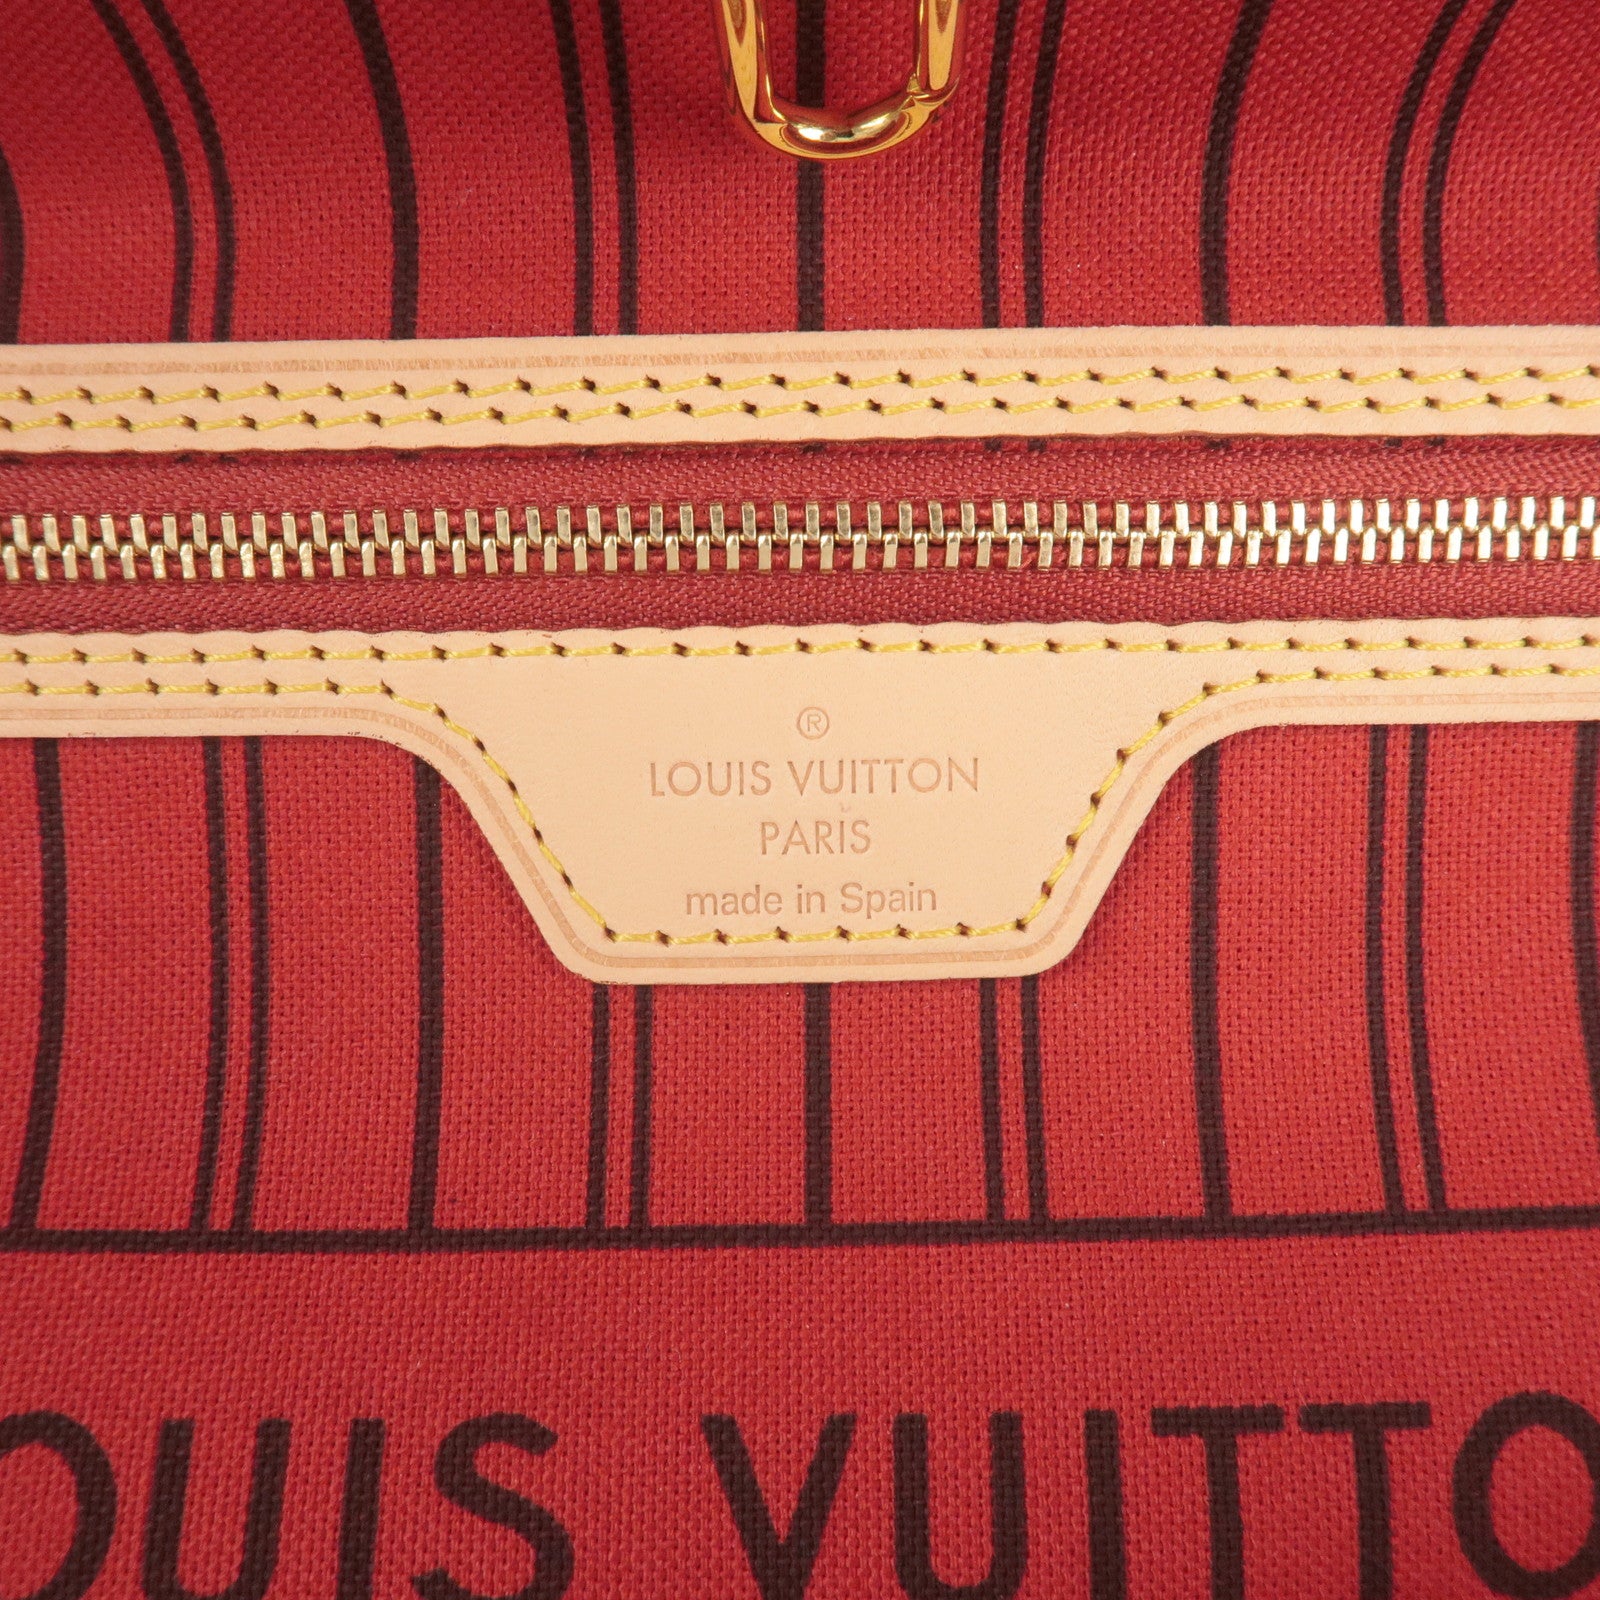 New Vuitton Neverfull MM Monogram Cerise M41177